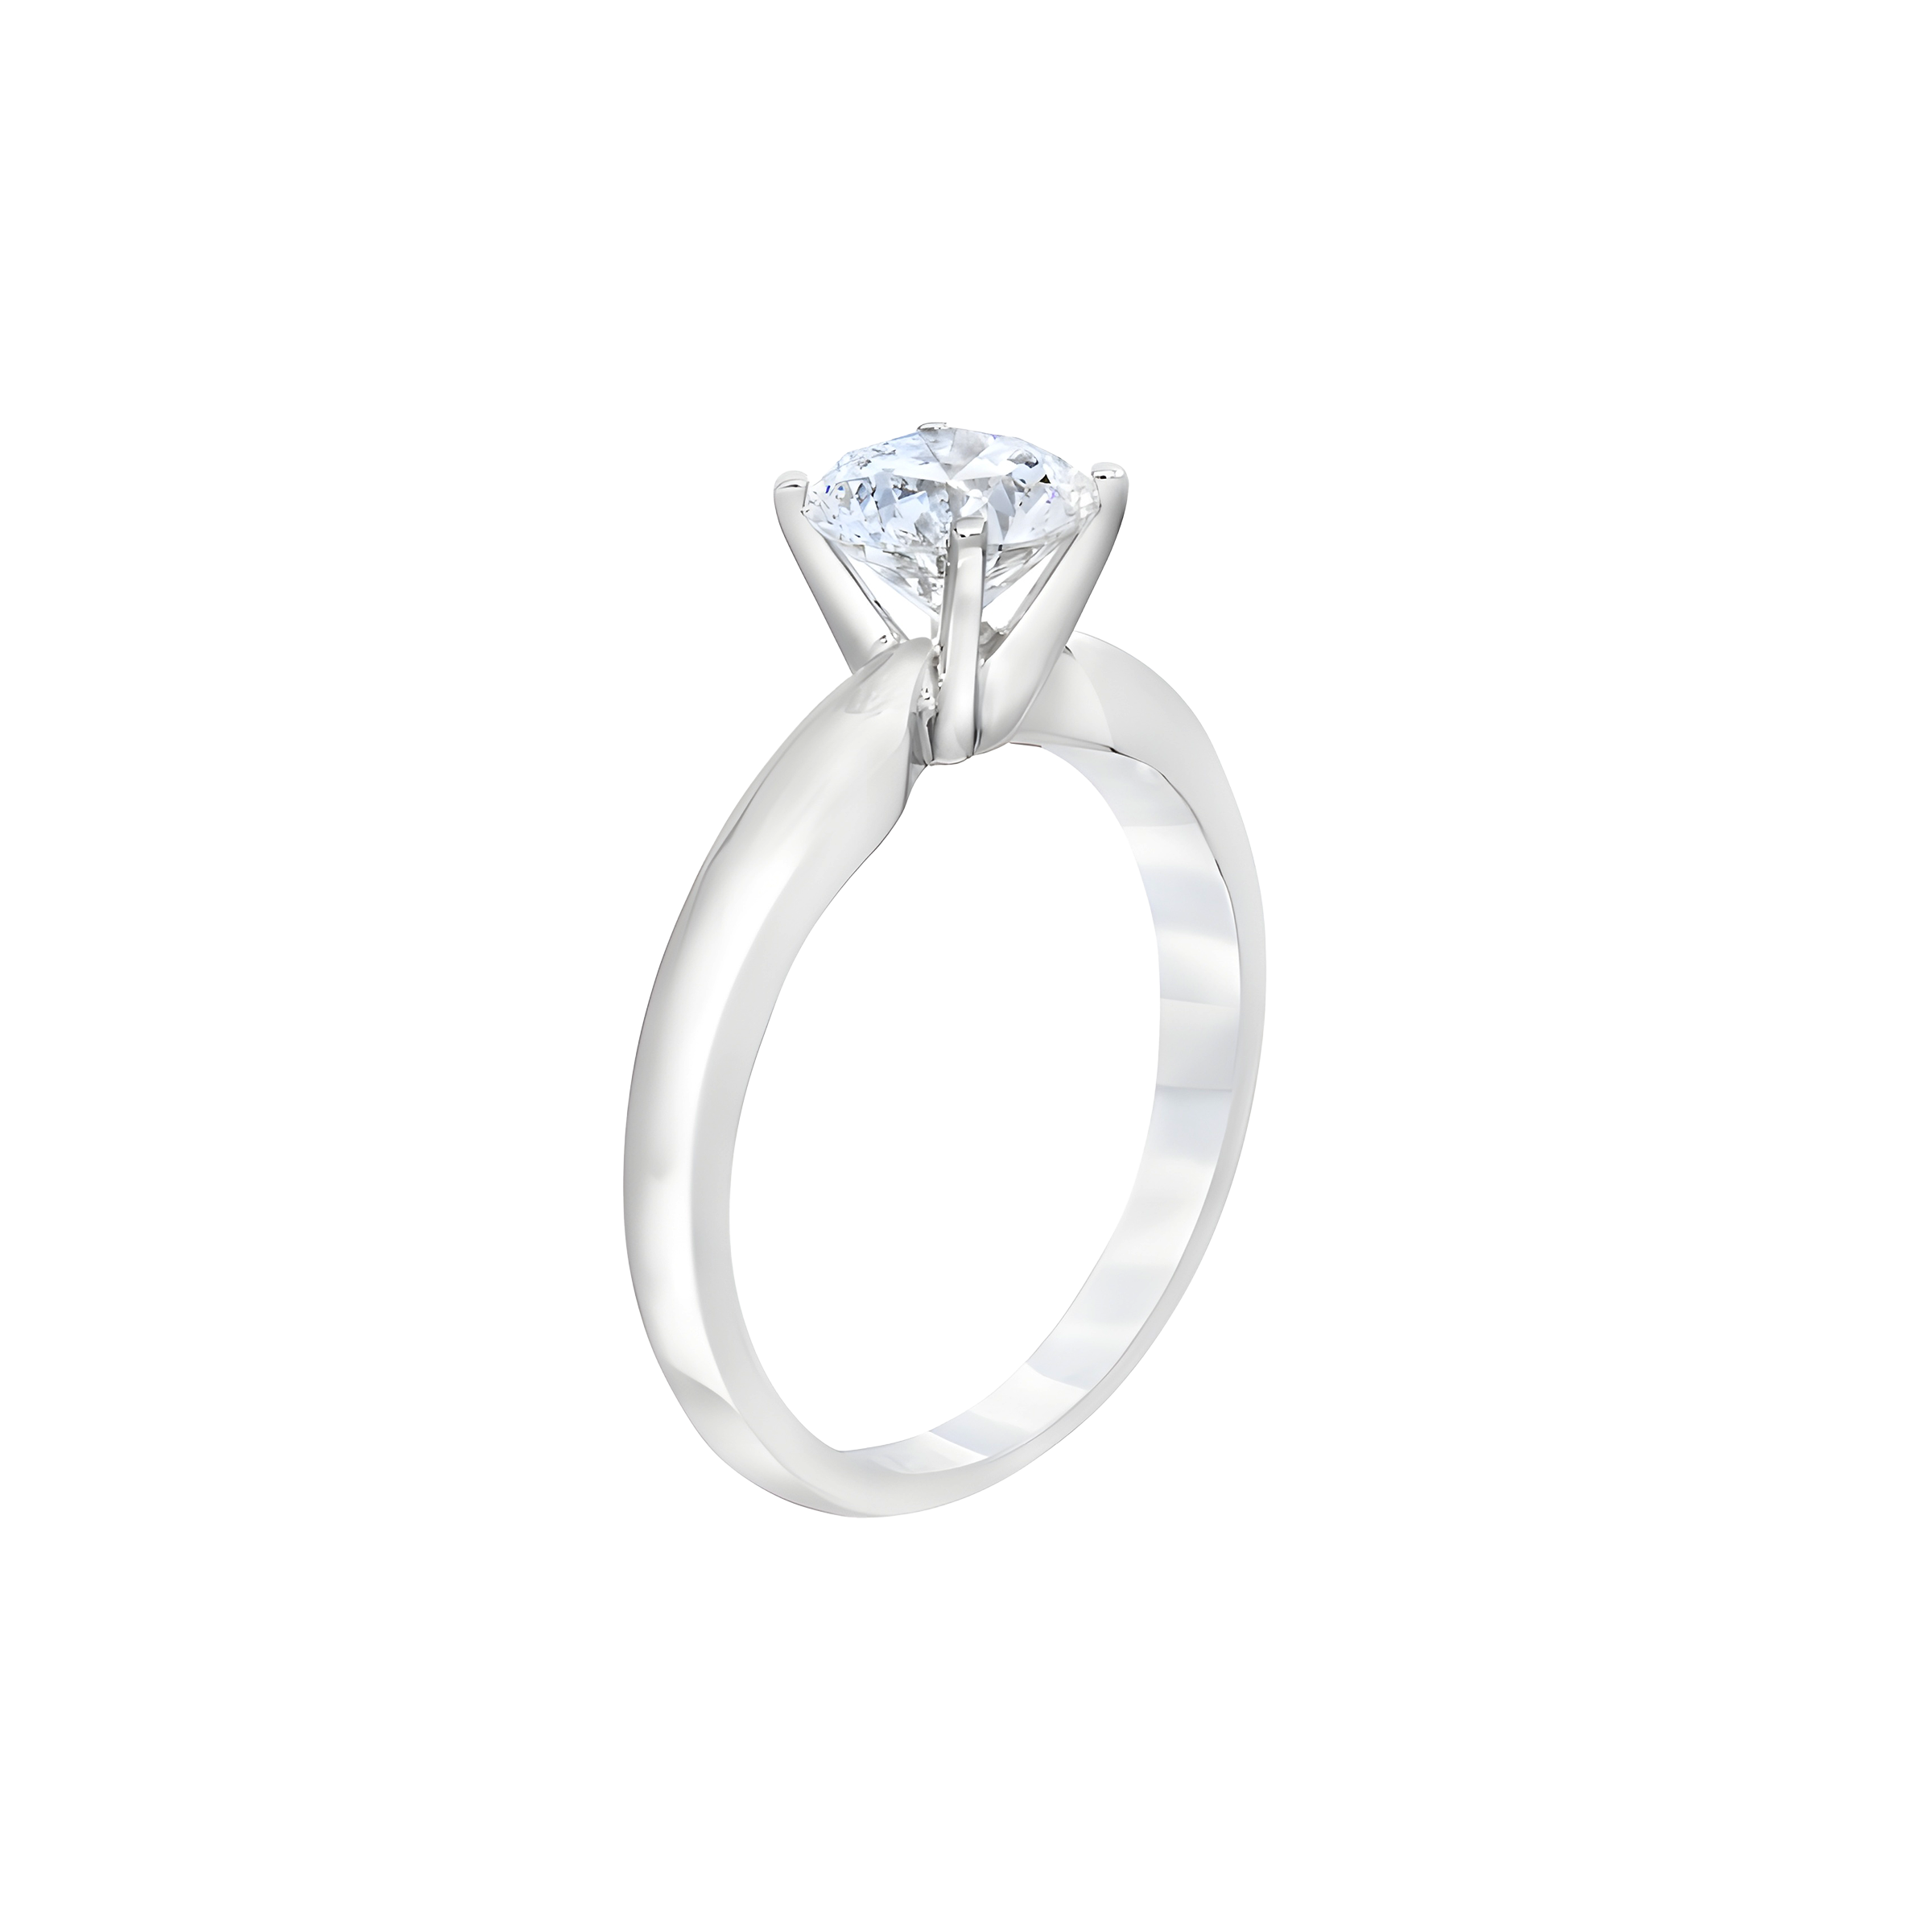 Four Prong Round Brilliant Solitaire Diamond Engagement Ring in Platinum